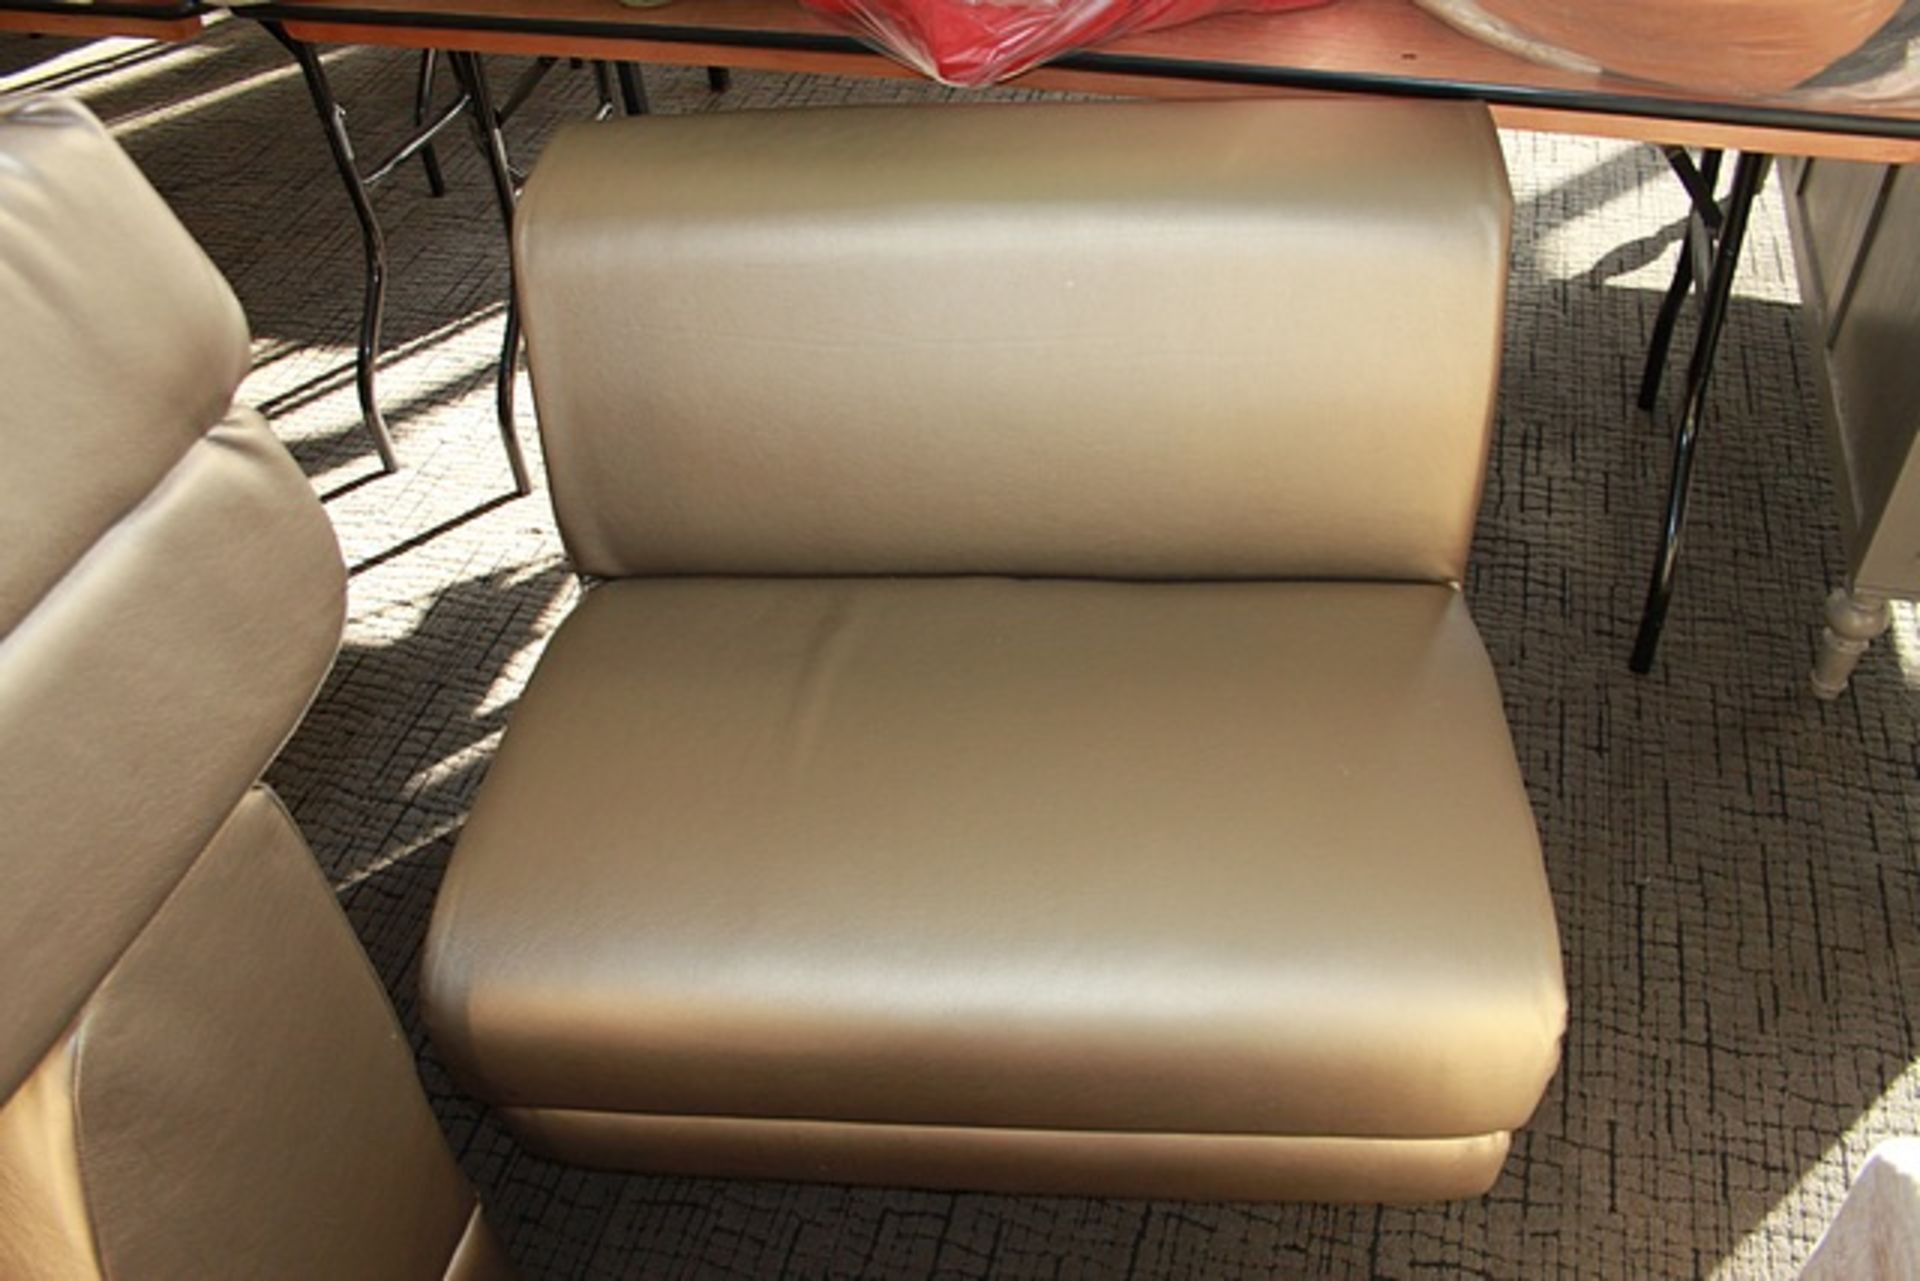 3 x Lounge seat sofa single seater shiny gold leather 830mm x 730mm x 480